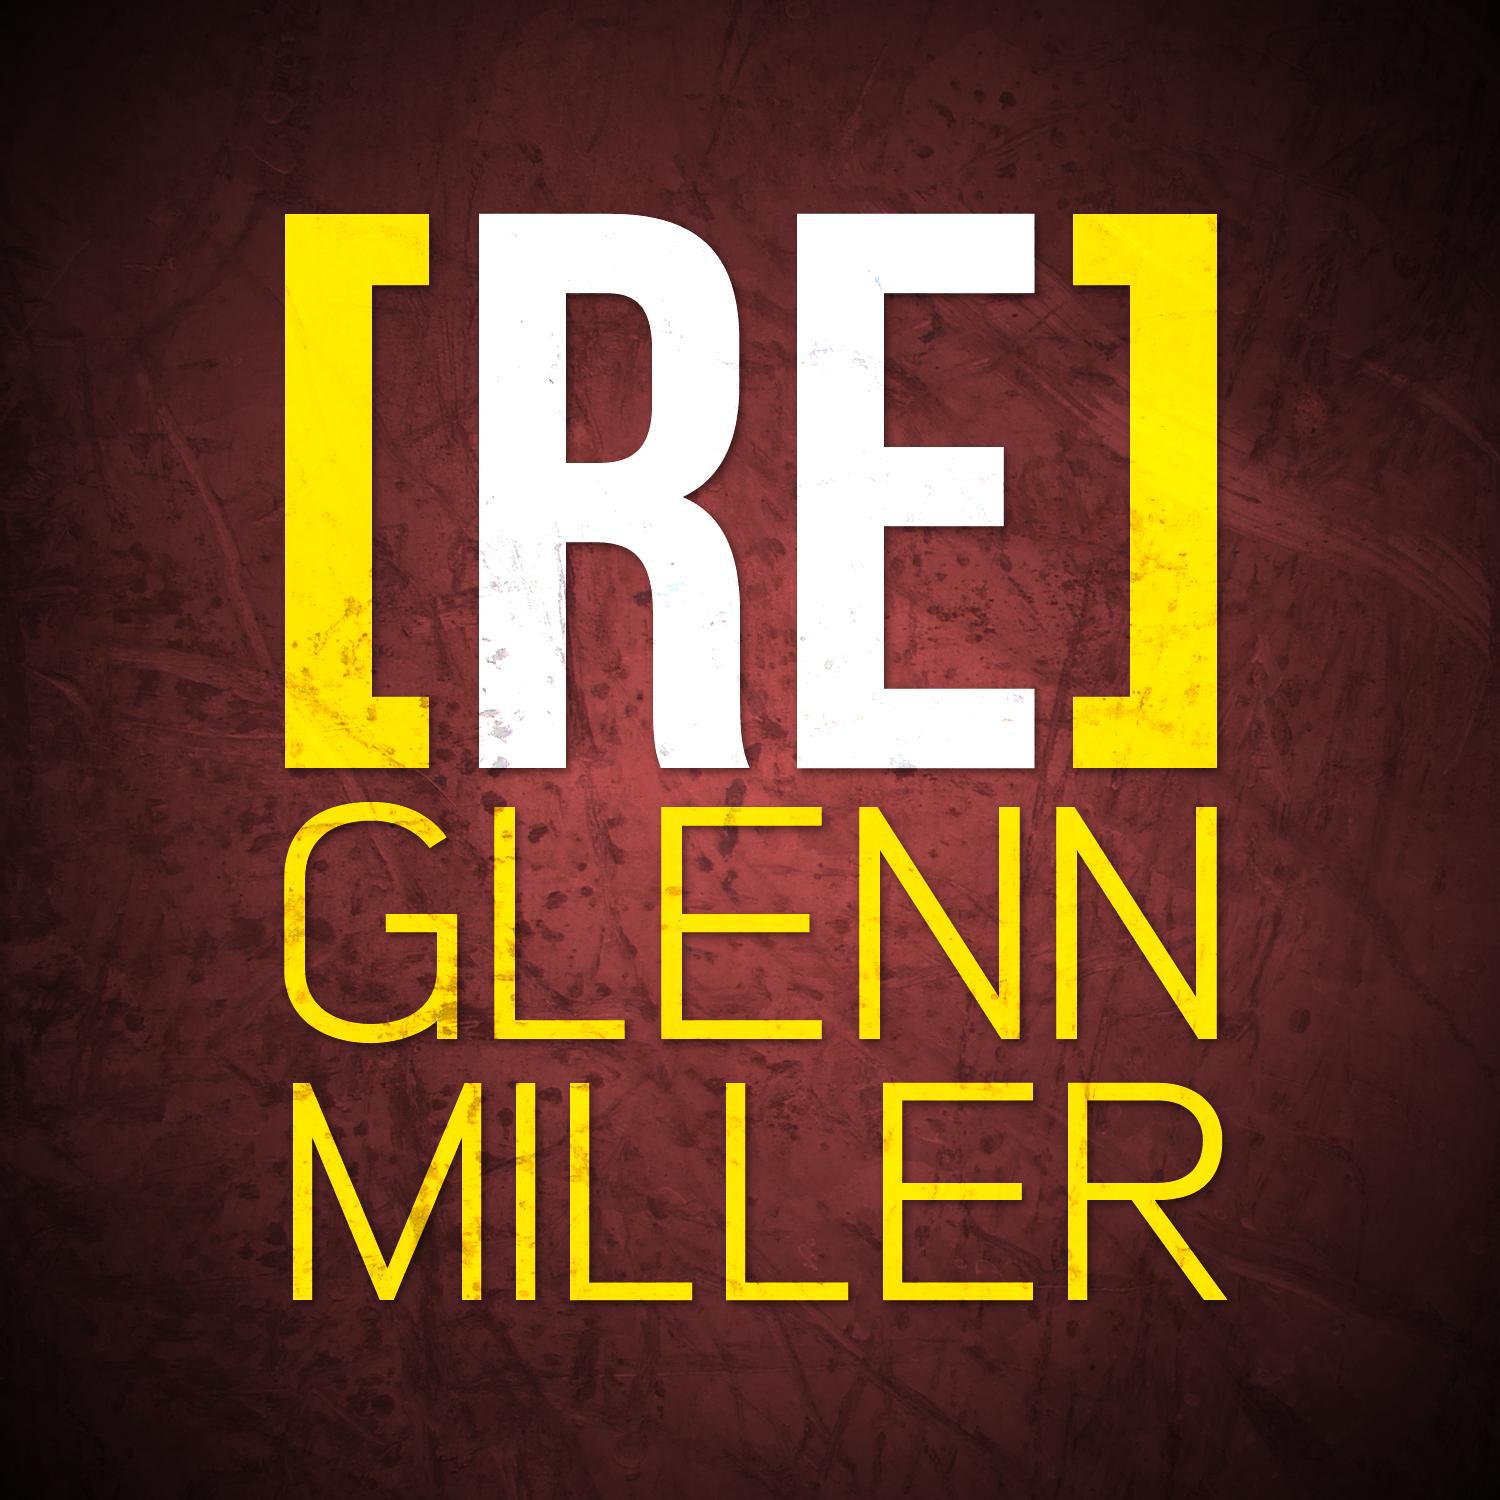 [RE]découvrez Glenn Miller